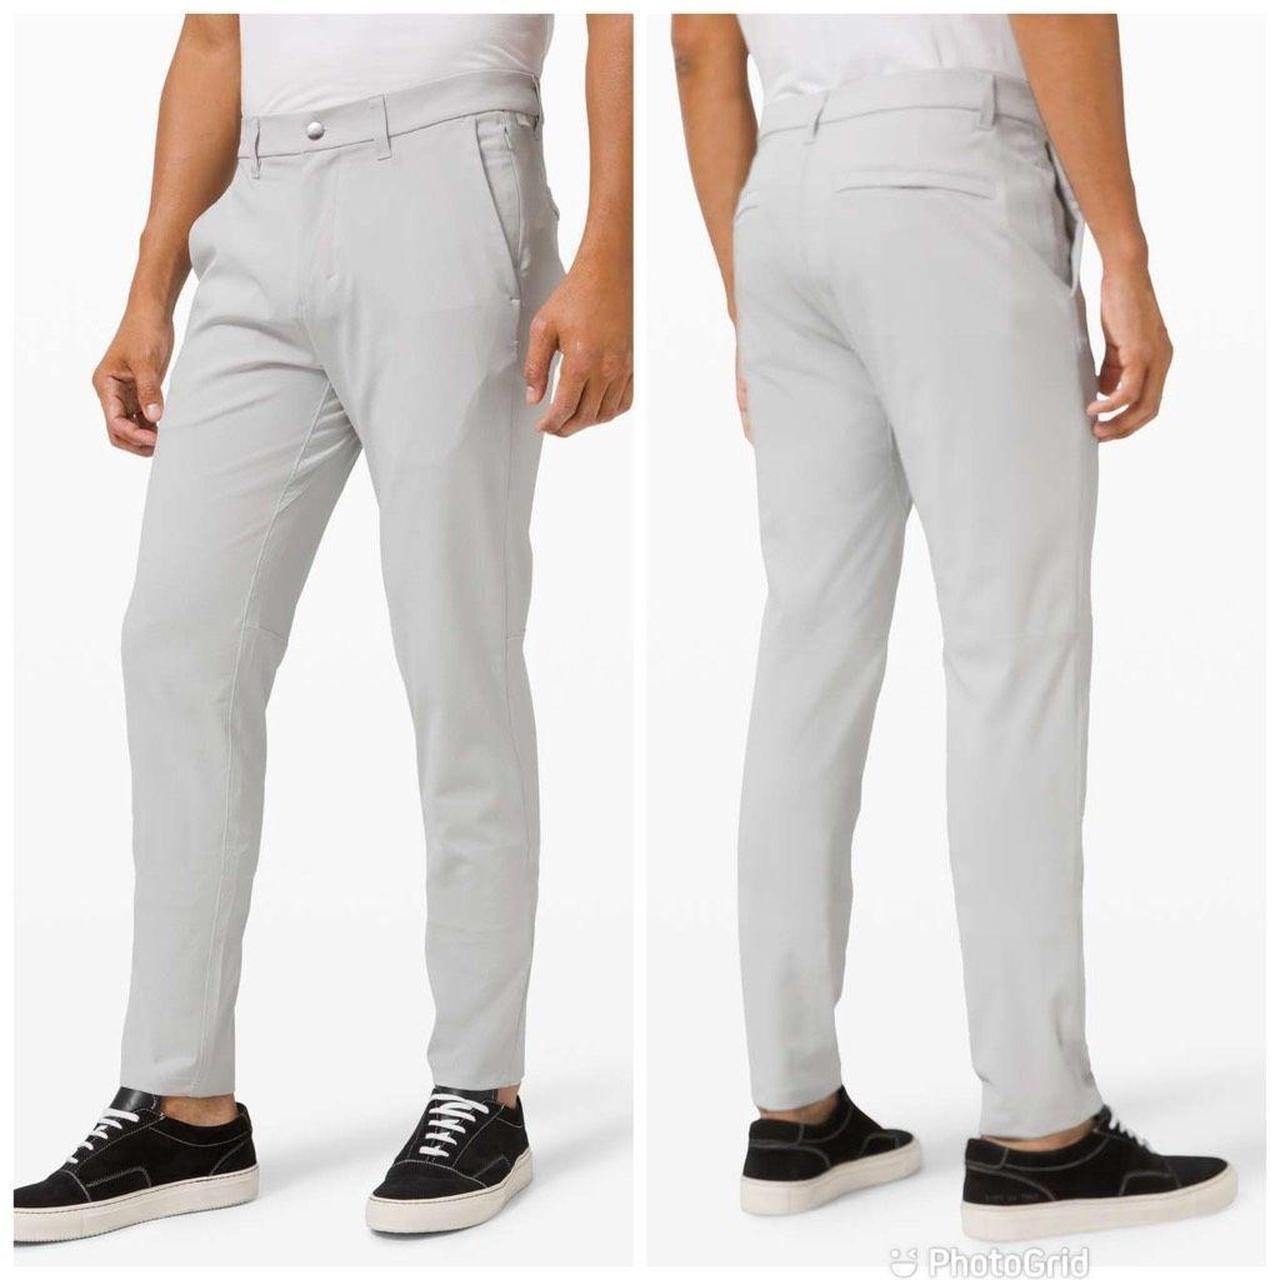 Buy Arrow Men's Regular Pants (ARADOTR2322_Light Grey_30) at Amazon.in